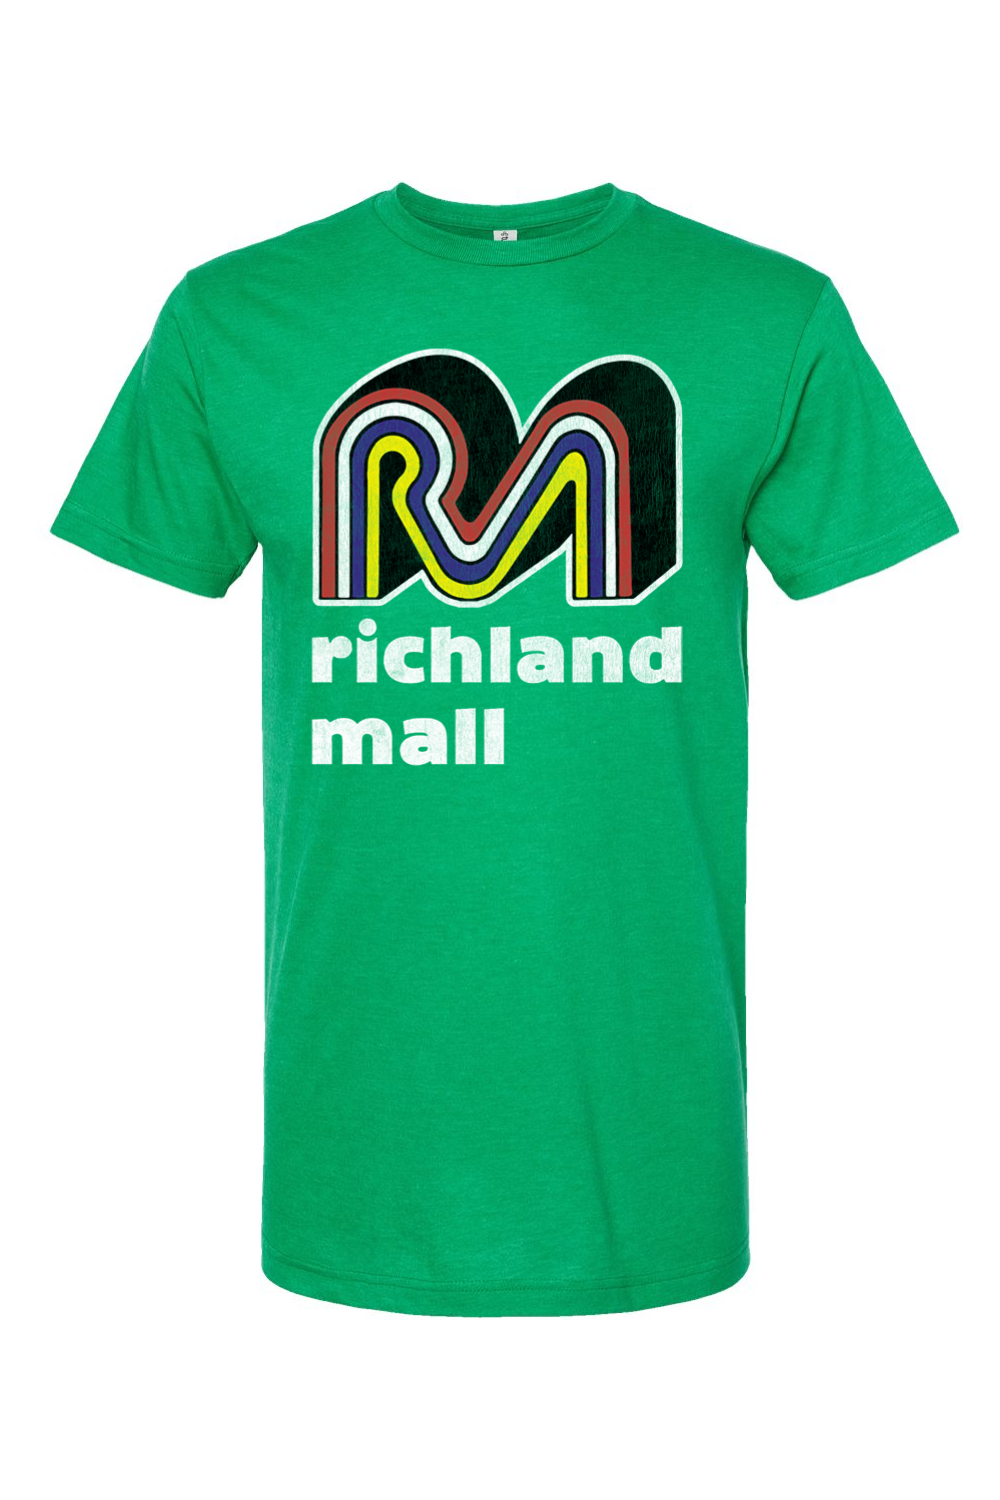 Richland Mall - Yinzylvania